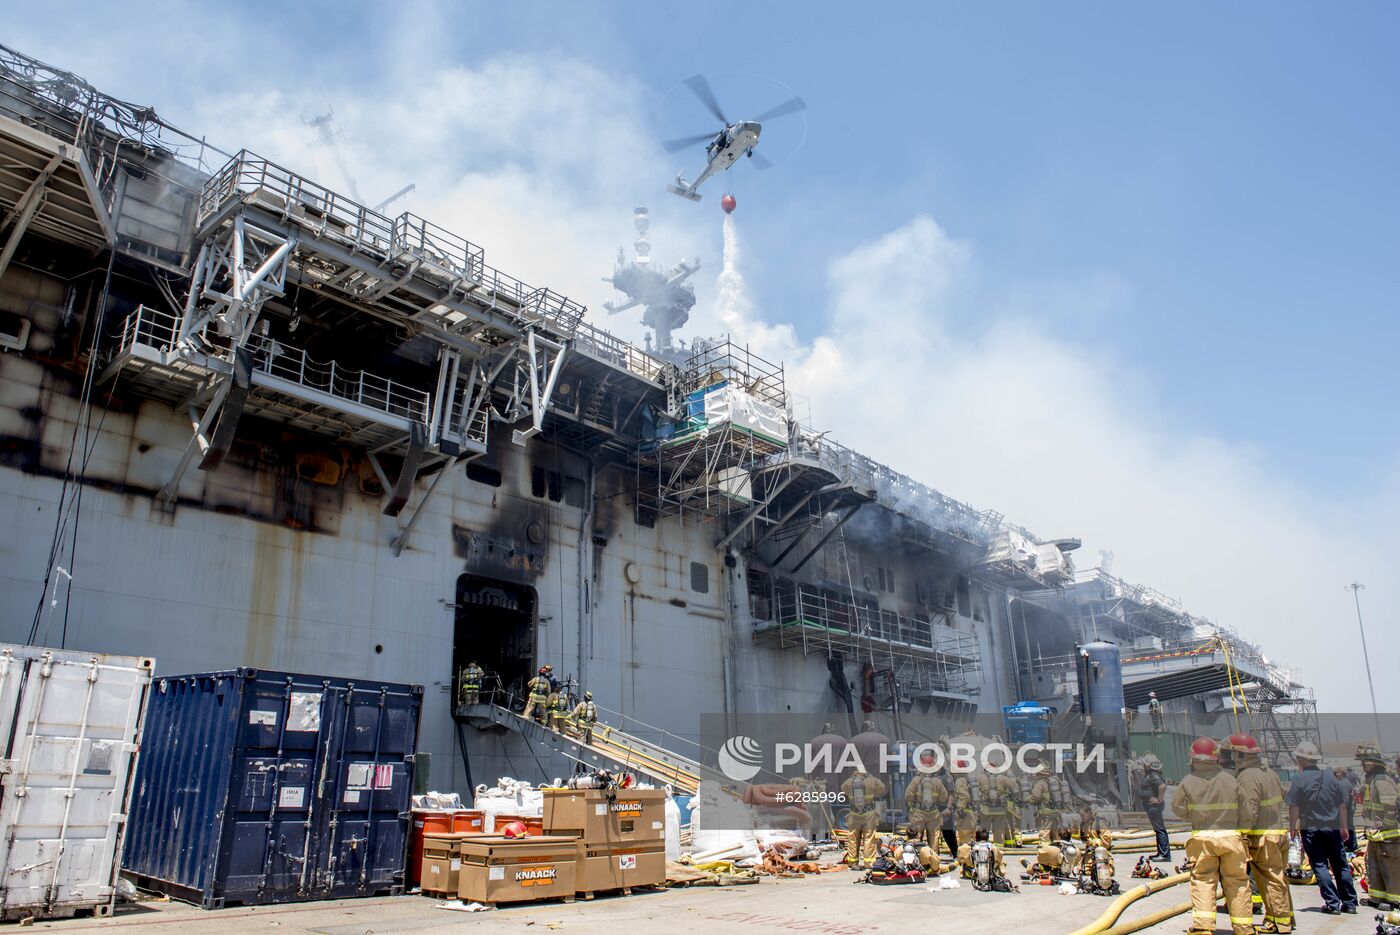 Пожар на борту десантного корабля на базе ВМС США в Сан-Диего